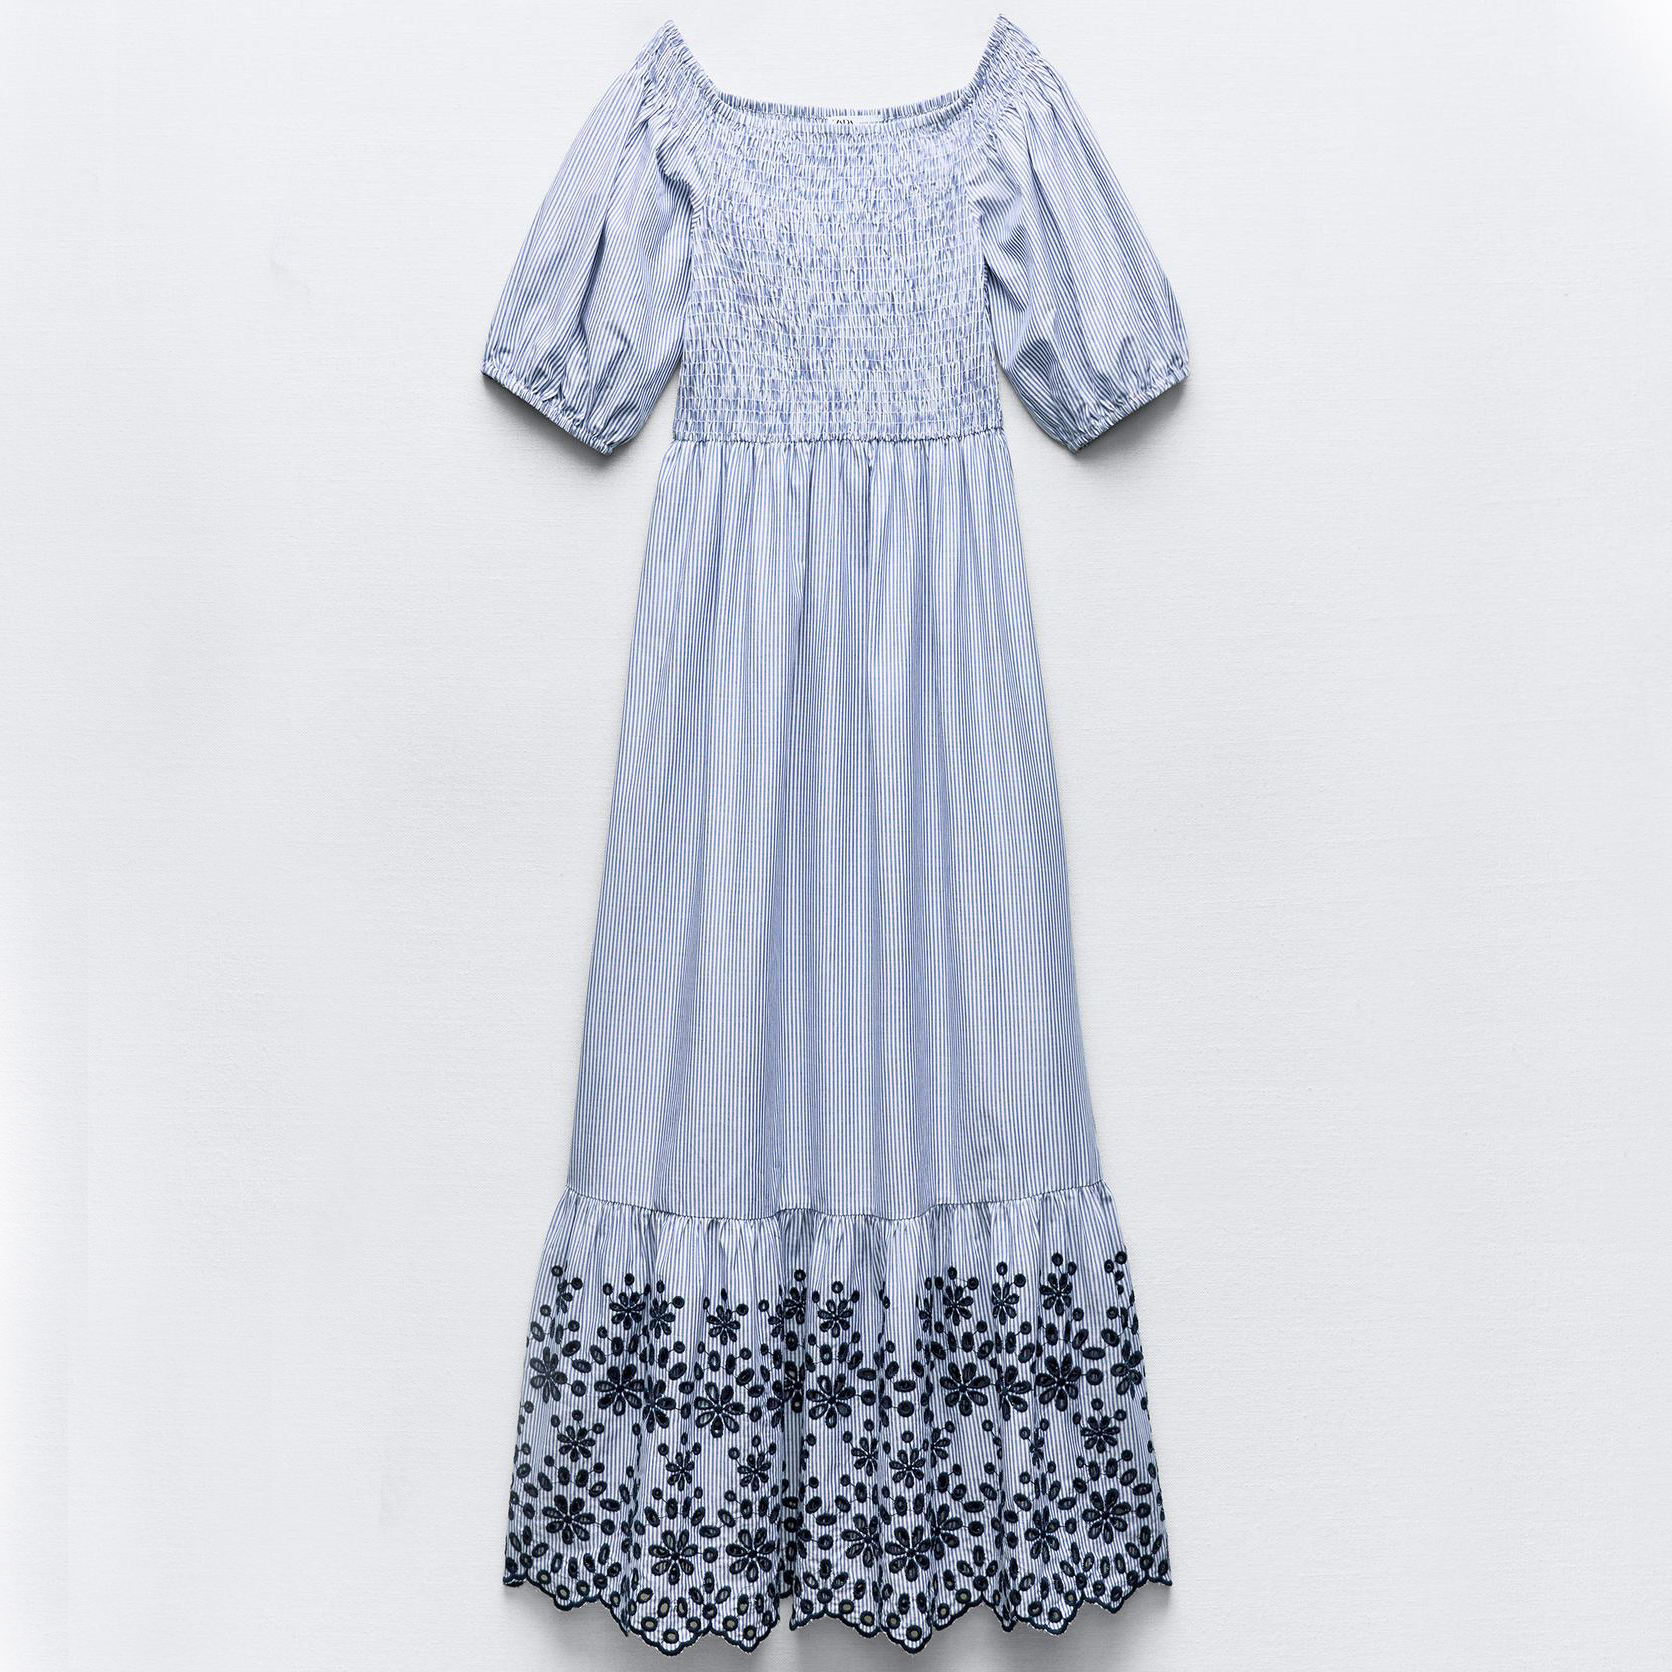 Платье Zara Striped With Cutwork Embroidery, голубой/белый футболка zara woven striped with embroidery голубой зеленый